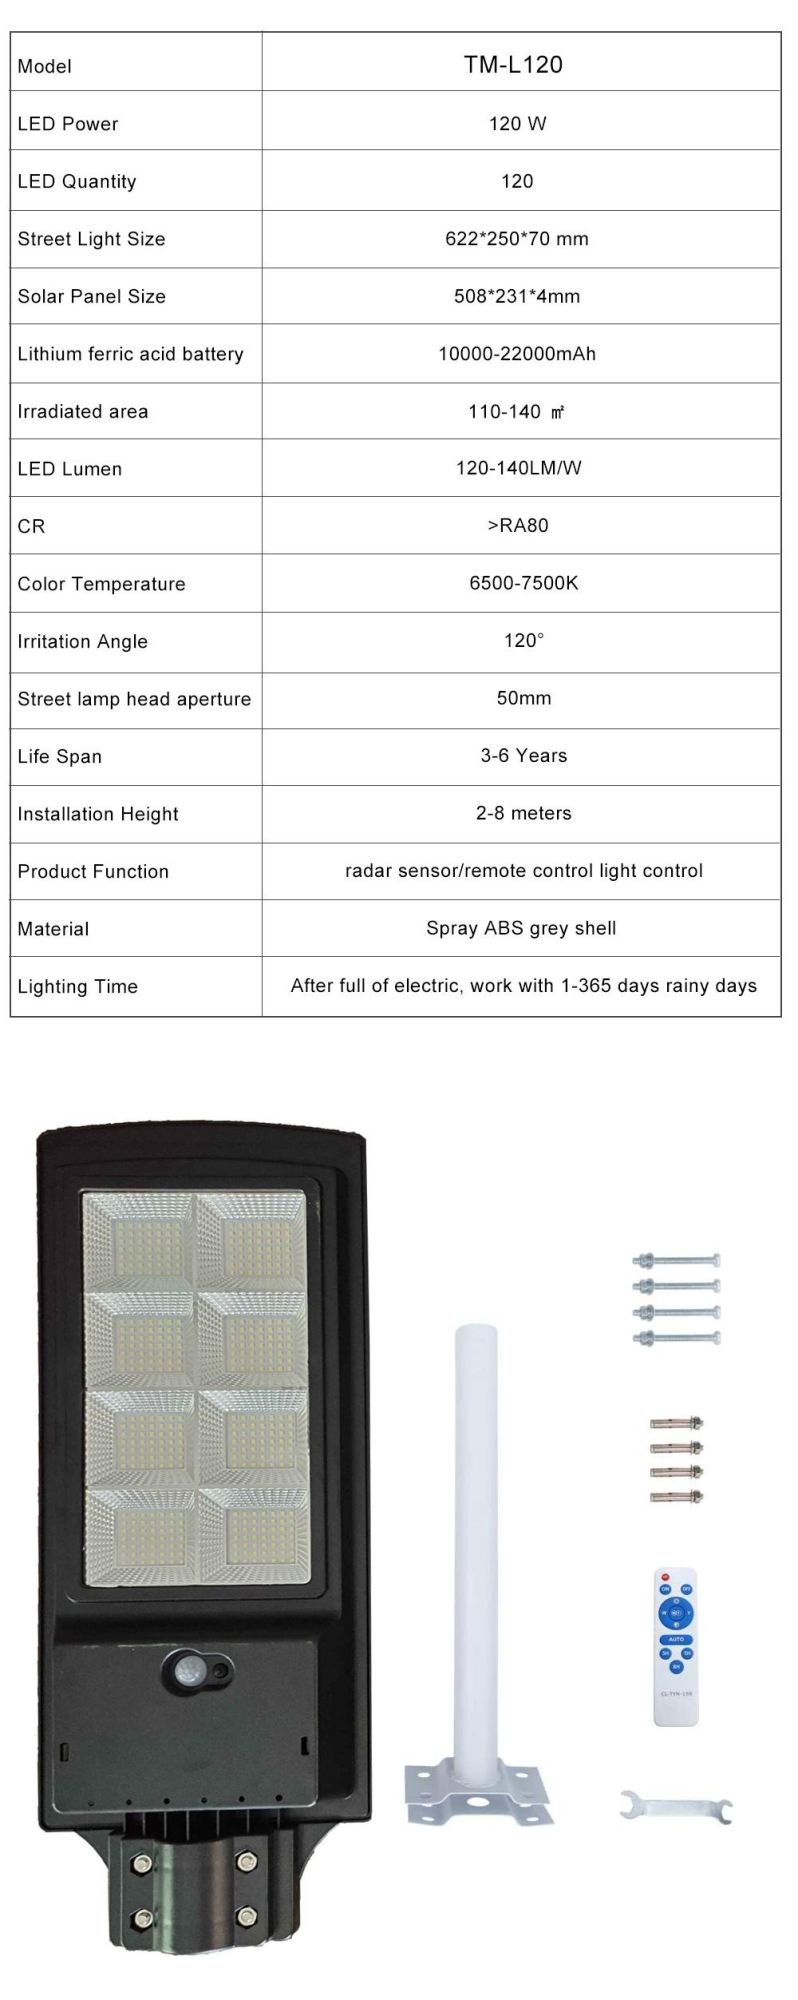 Montion Sensor Low Consumption Outdoor Garden Solar LED Street Light